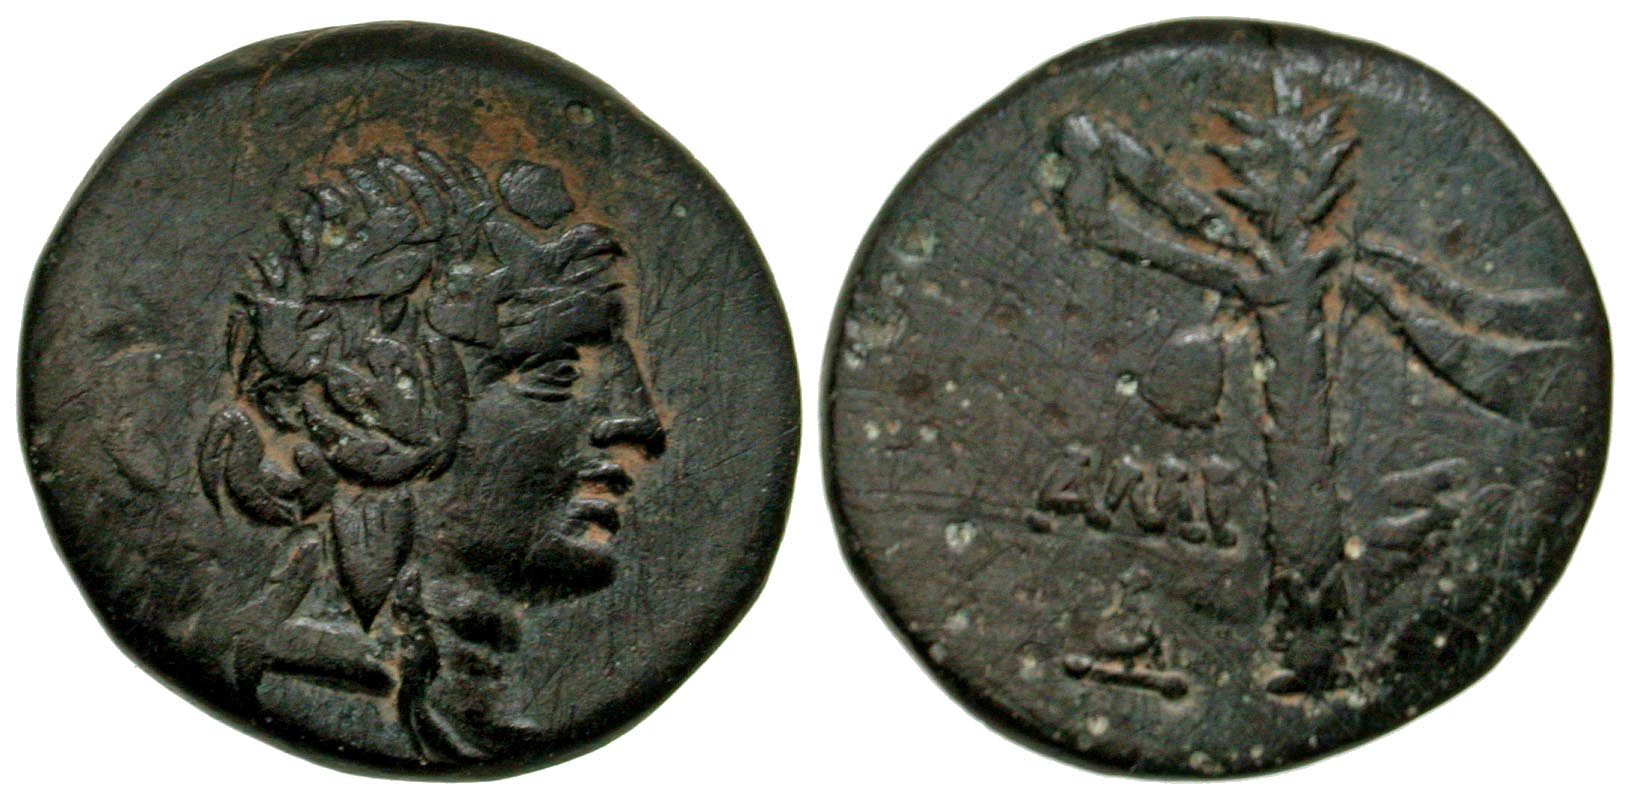 Pontic Kingdom, Amisos. Civic issue, time of Mithradates VI. ca. 85-65 B.C. AE 19. 